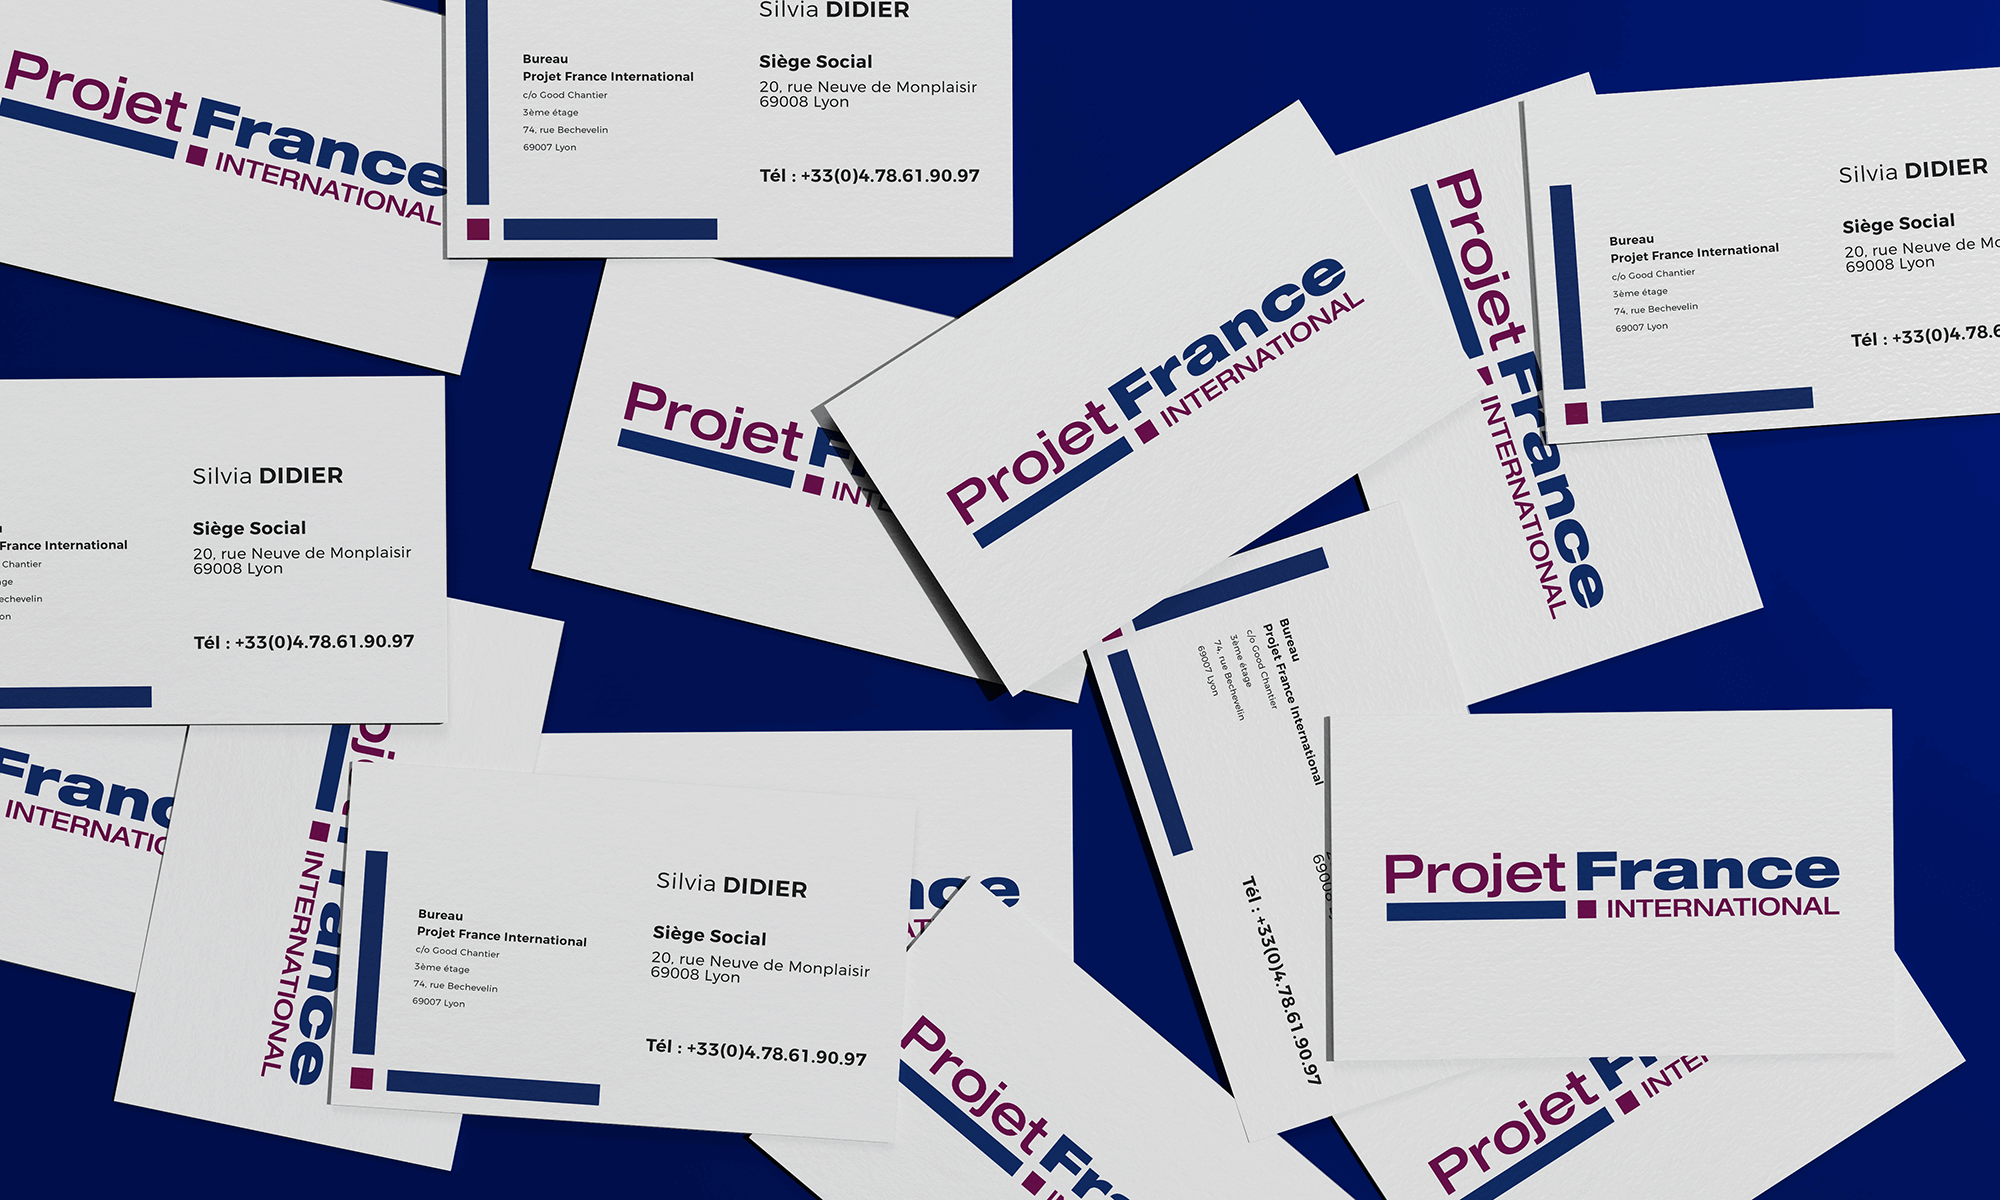 Projet France International